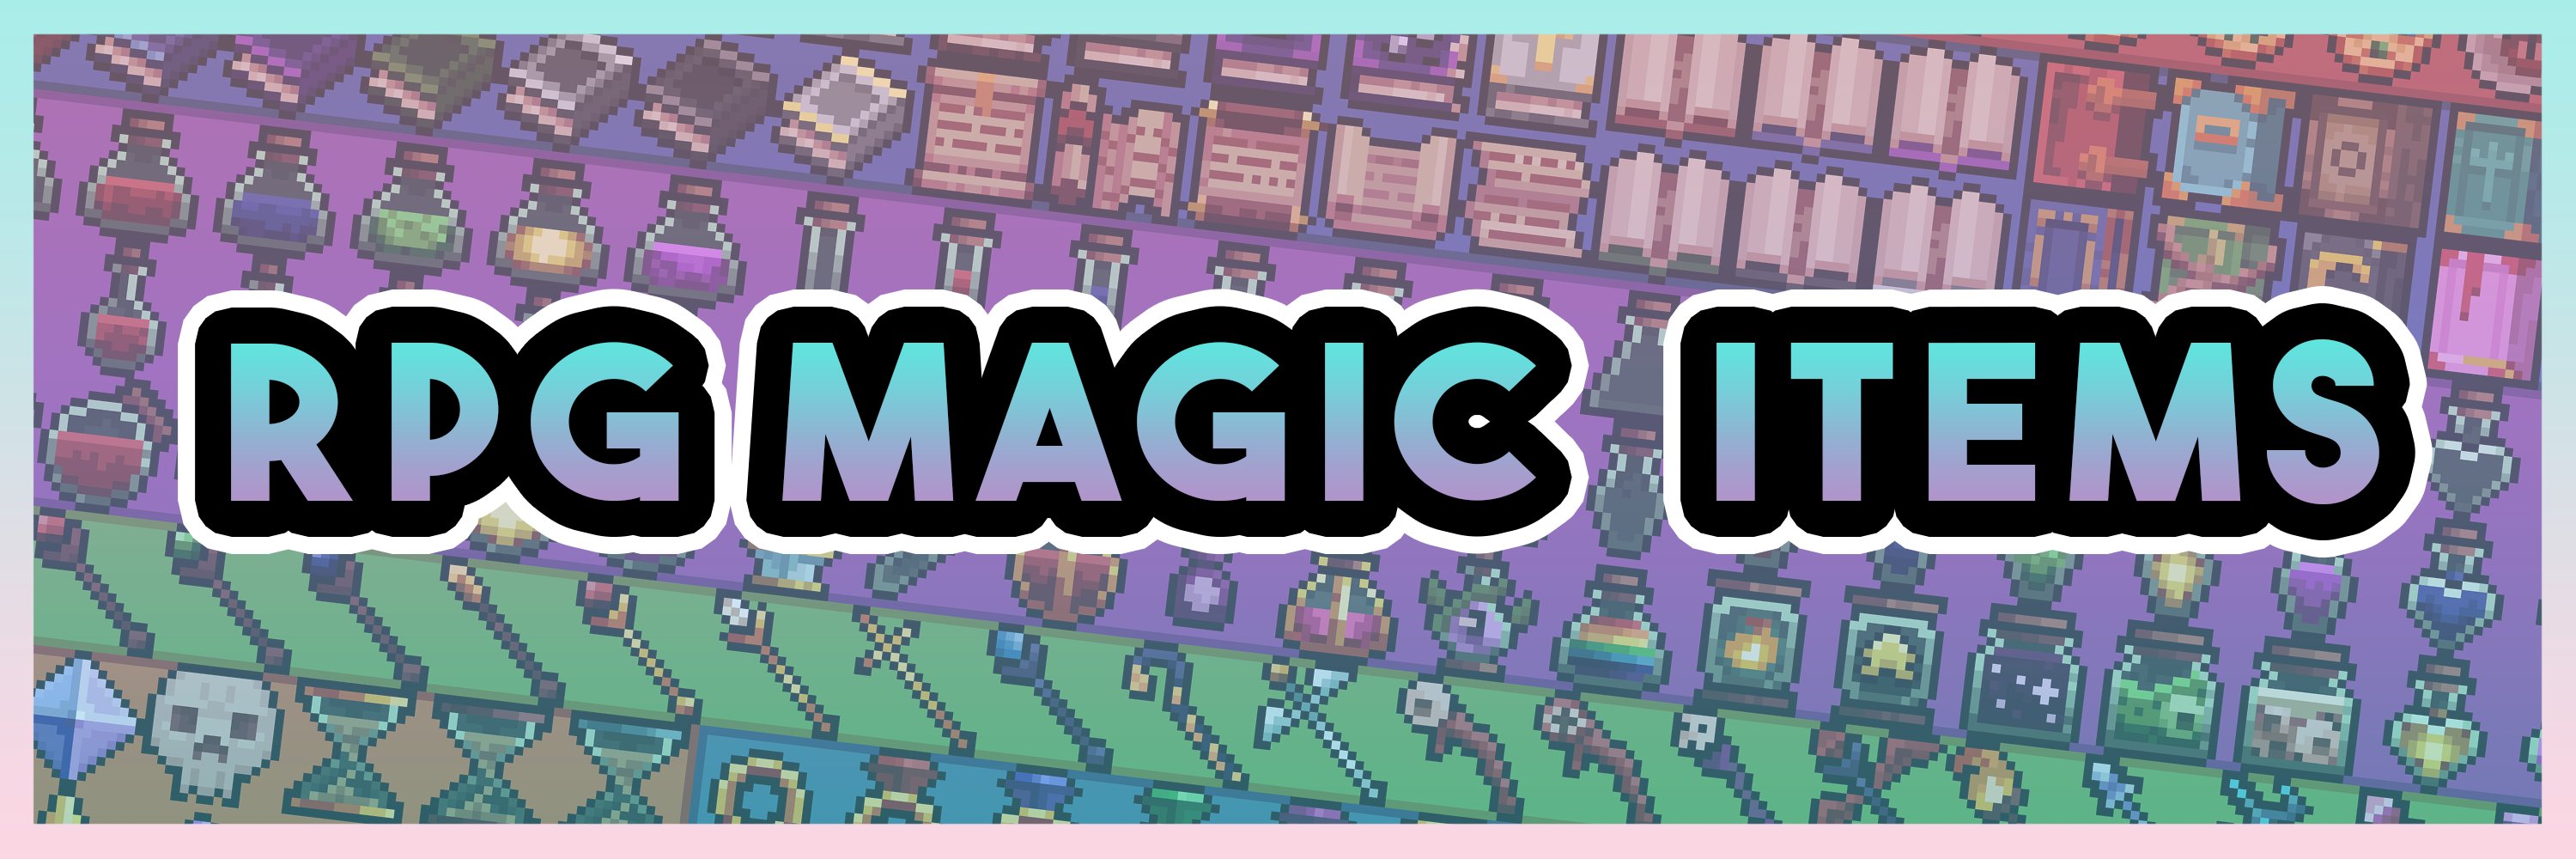 16x16 RPG Magical Items 200+ Pack